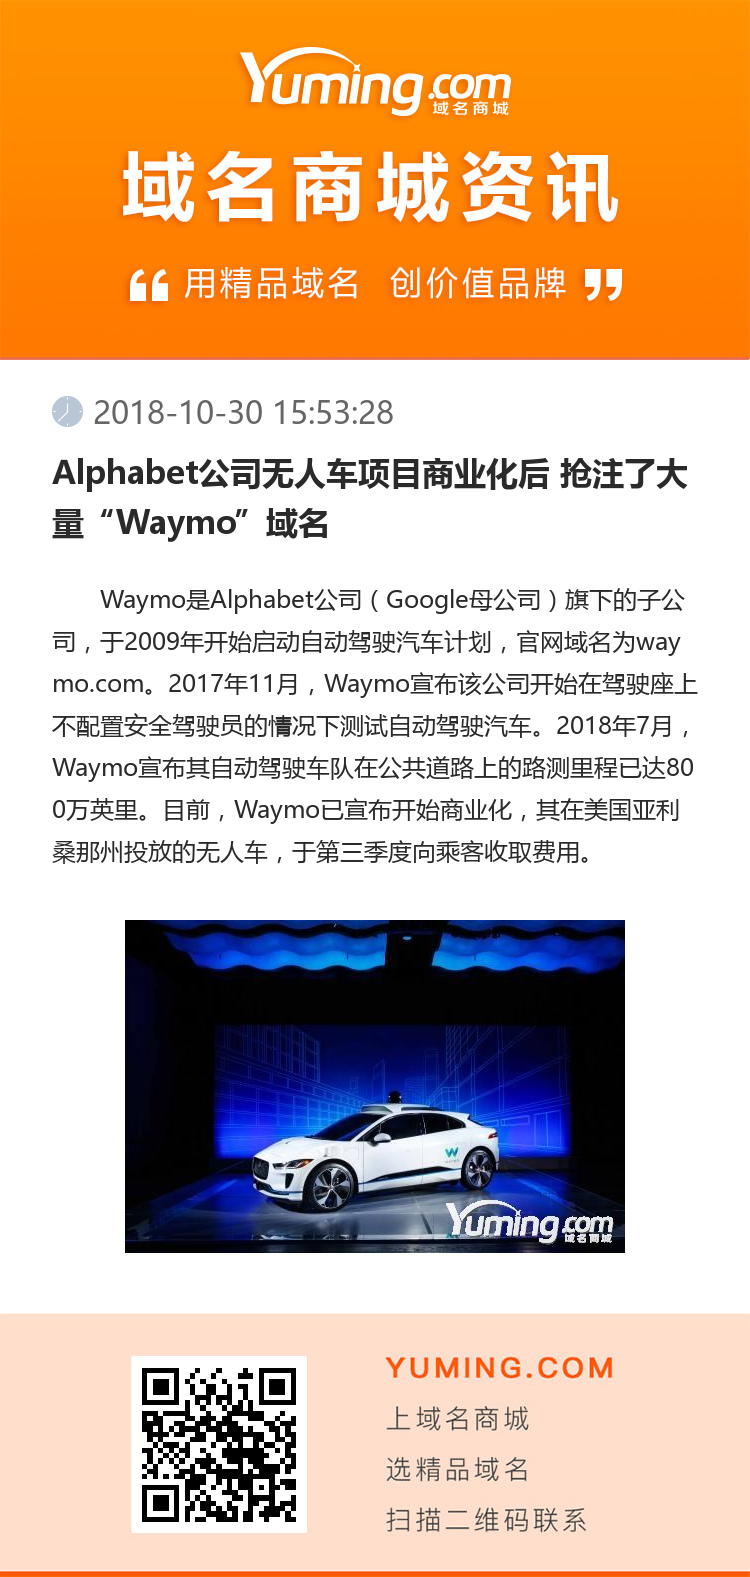 Alphabet公司无人车项目商业化后 抢注了大量“Waymo”域名